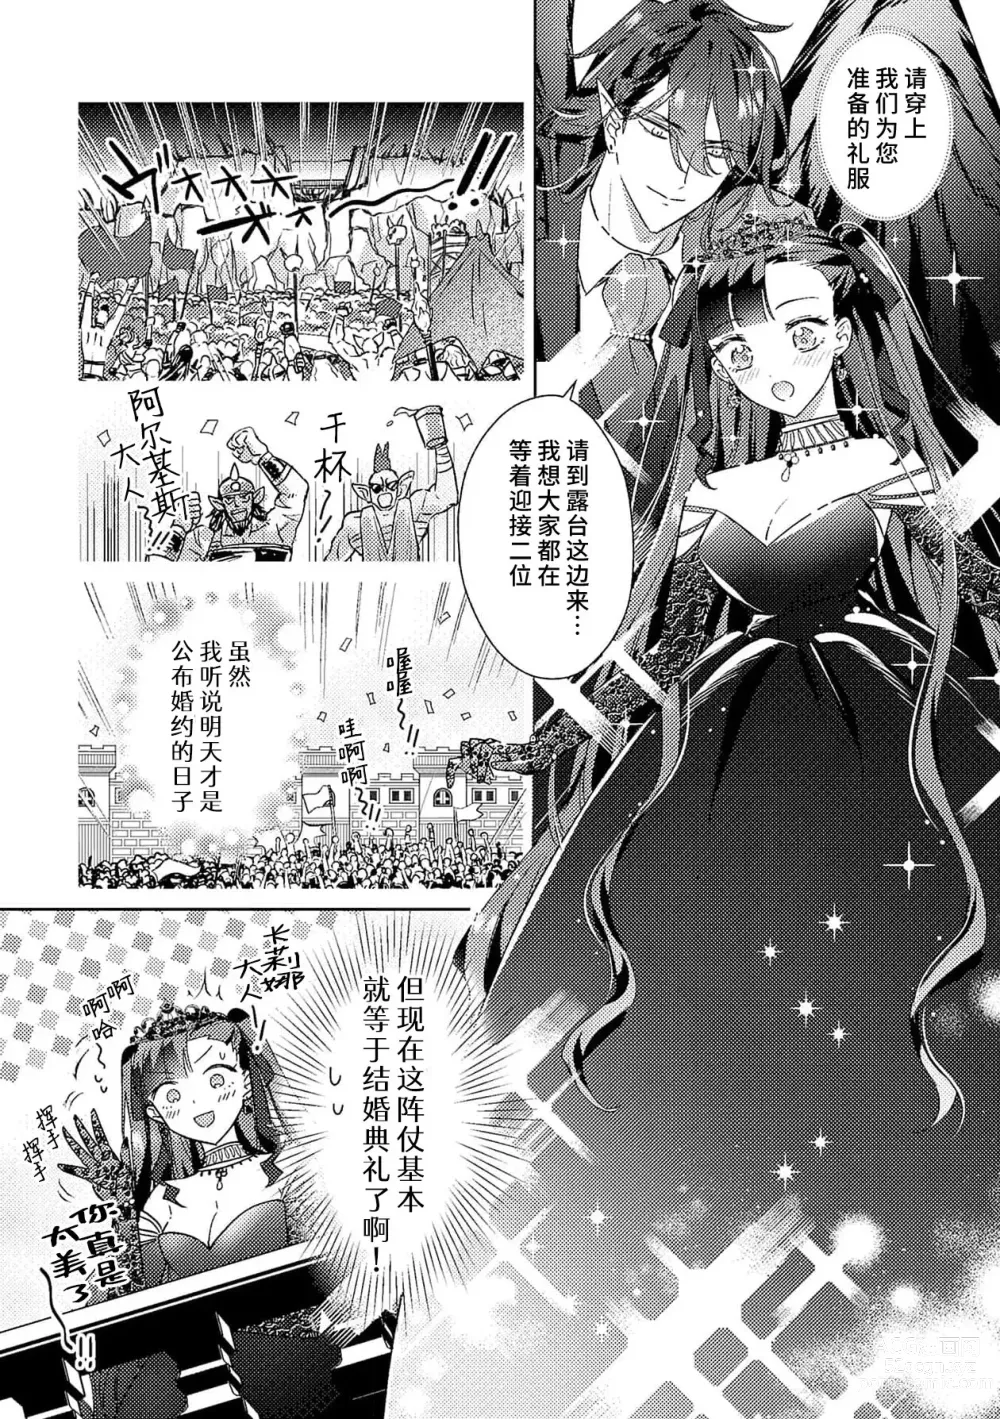 Page 202 of manga 身为恶役千金，堕落于魔界王子身下这条路线真的可以有？ 1-7